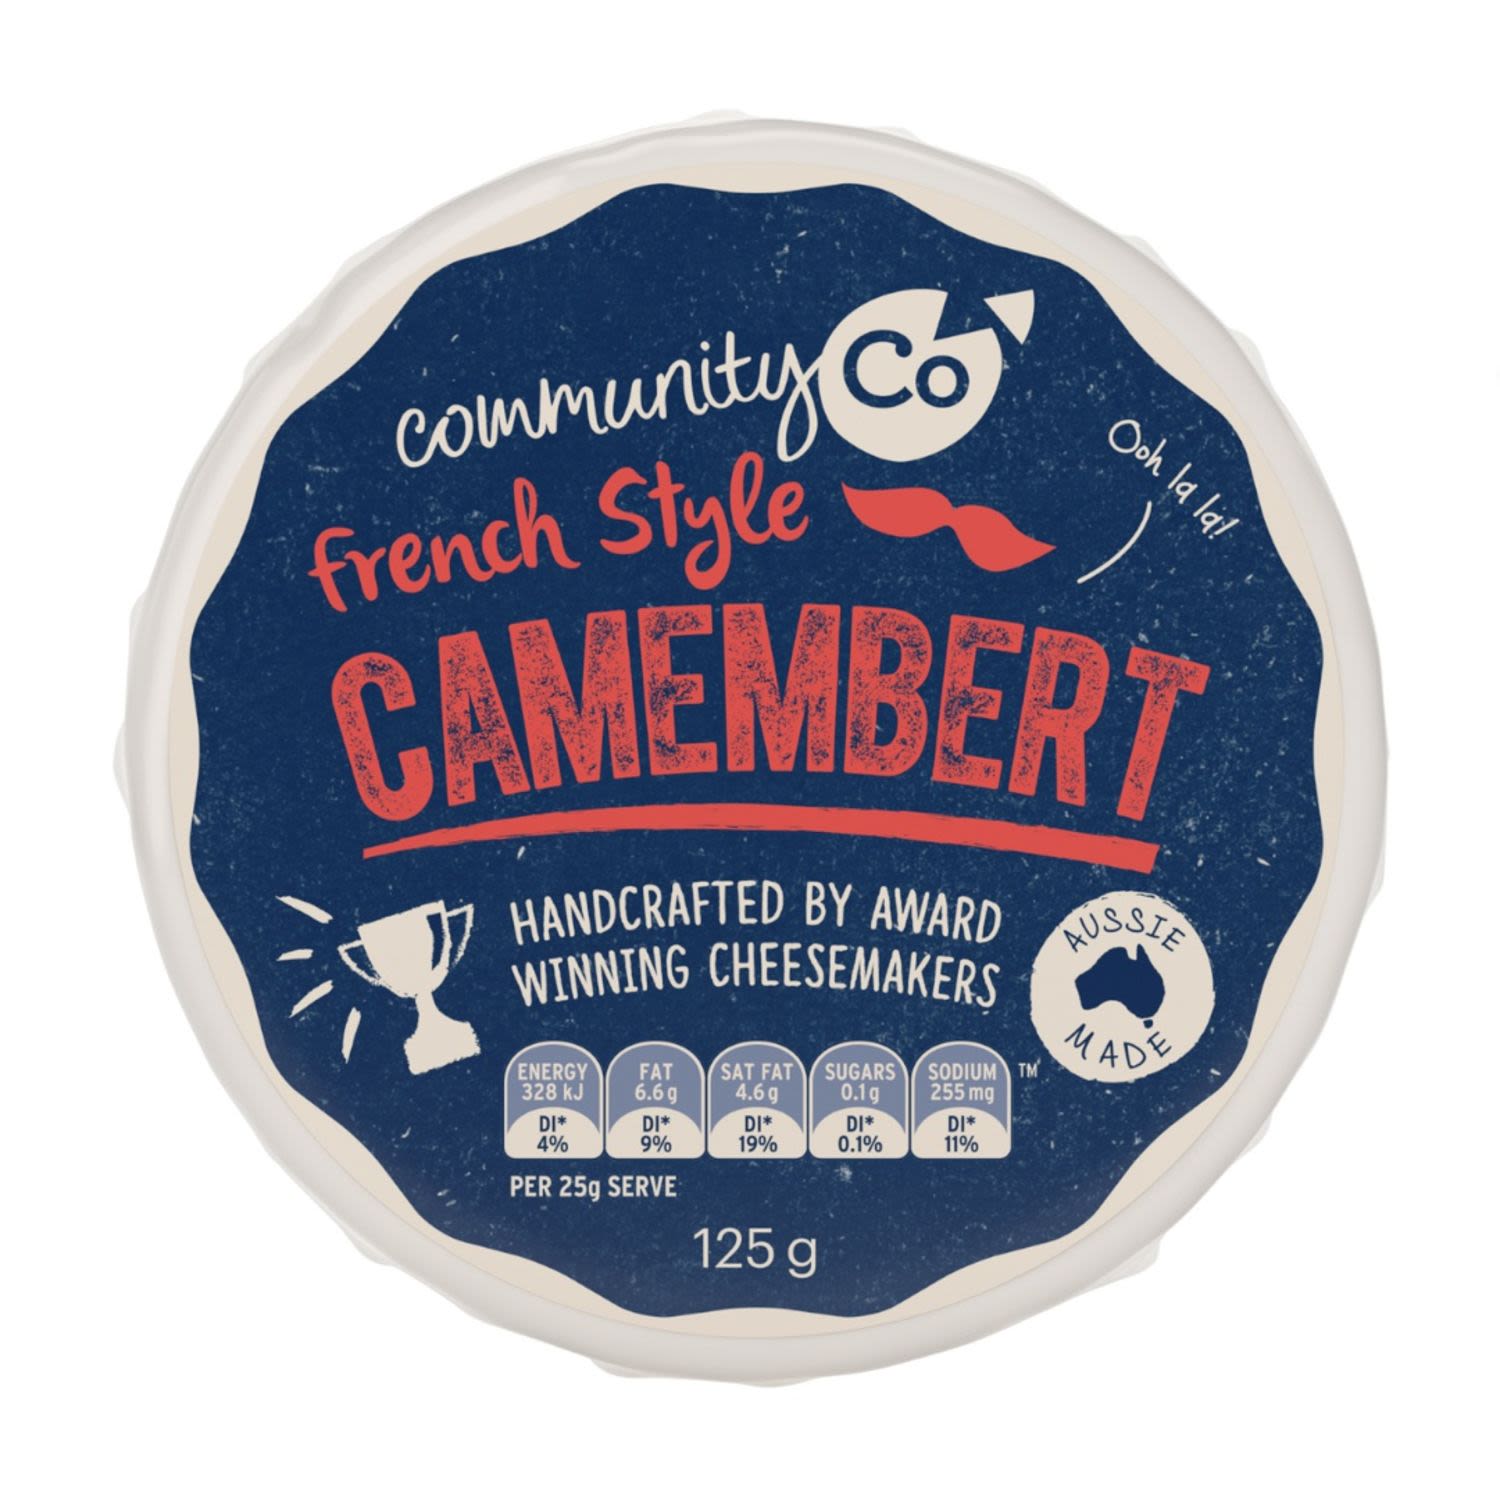 Community Co Camembert Cheese, 125 Gram